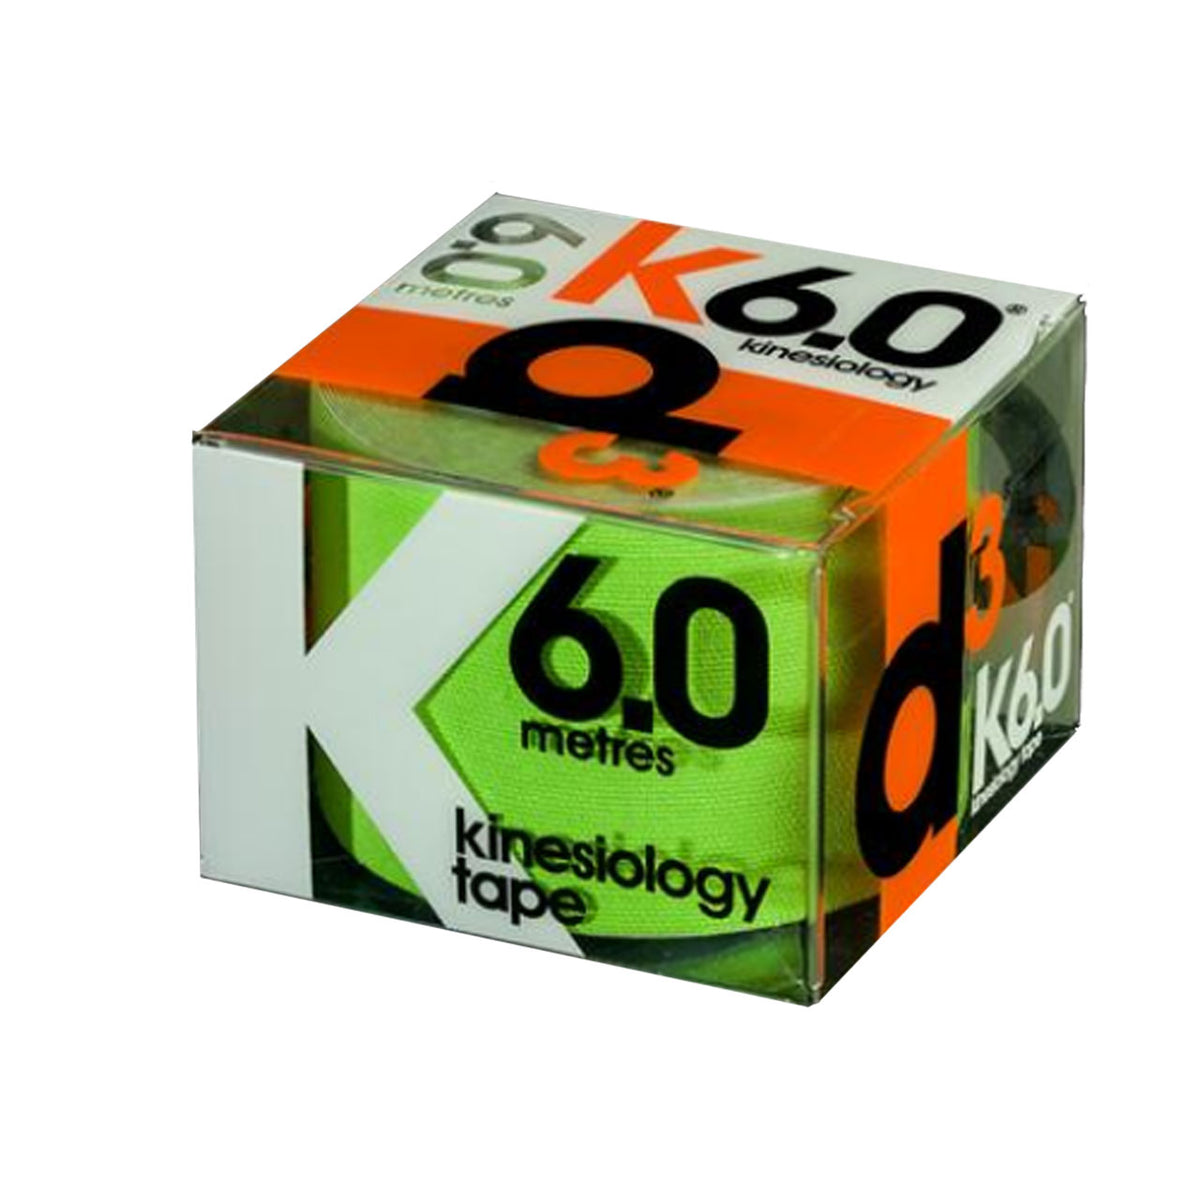 D3 Kinesiology Tape K6.0 50mm x 6m GREEN